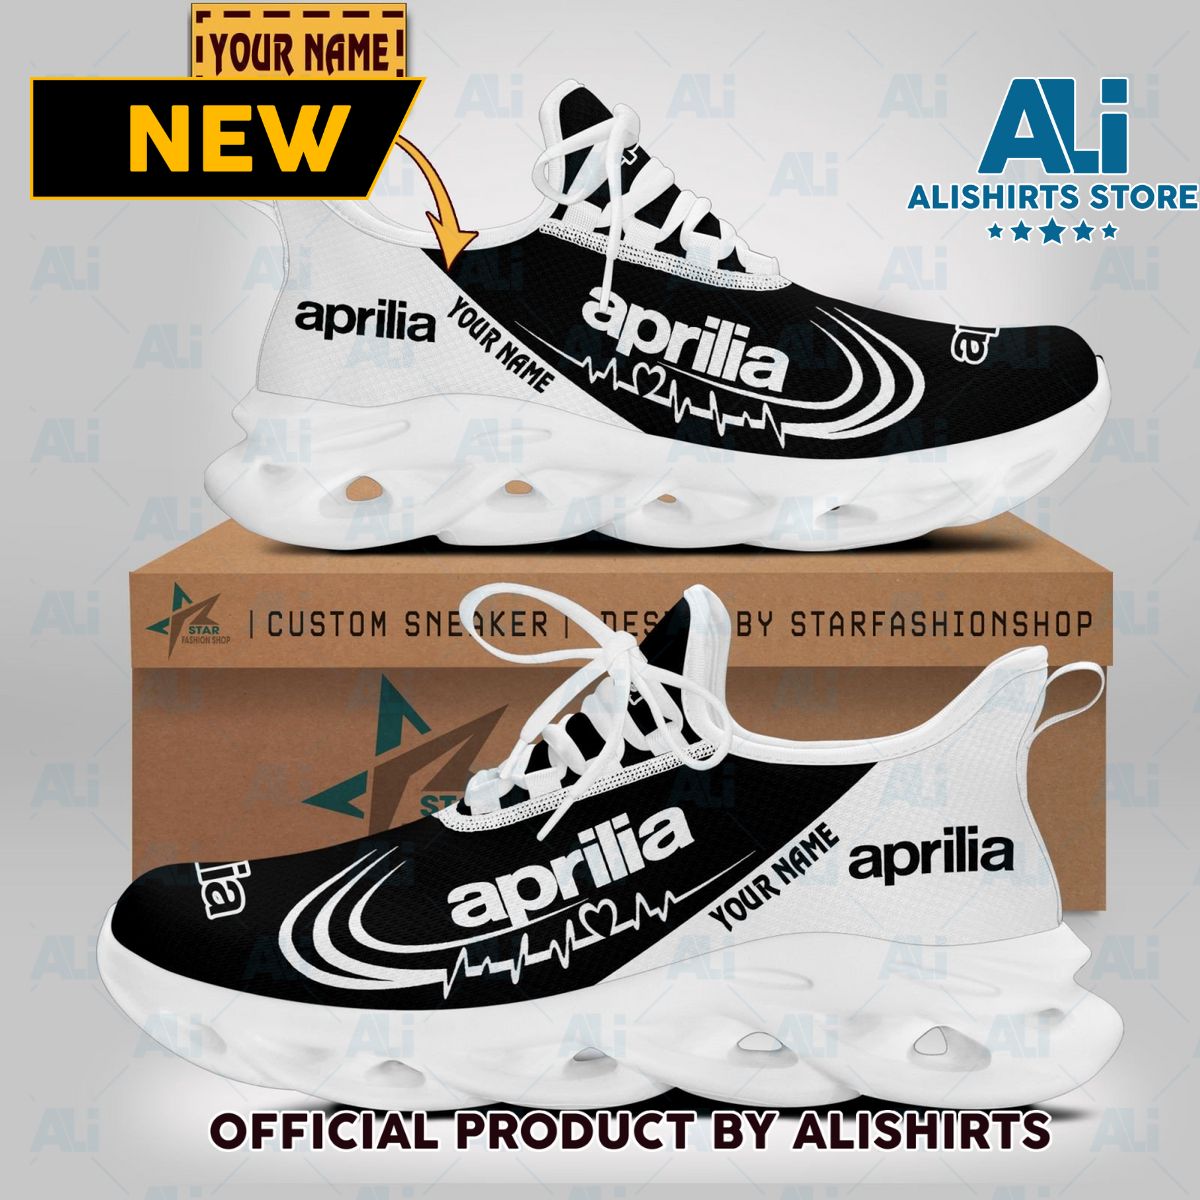 Aprilia Car Brand Lover Clunky Sneaker Max Soul Shoes